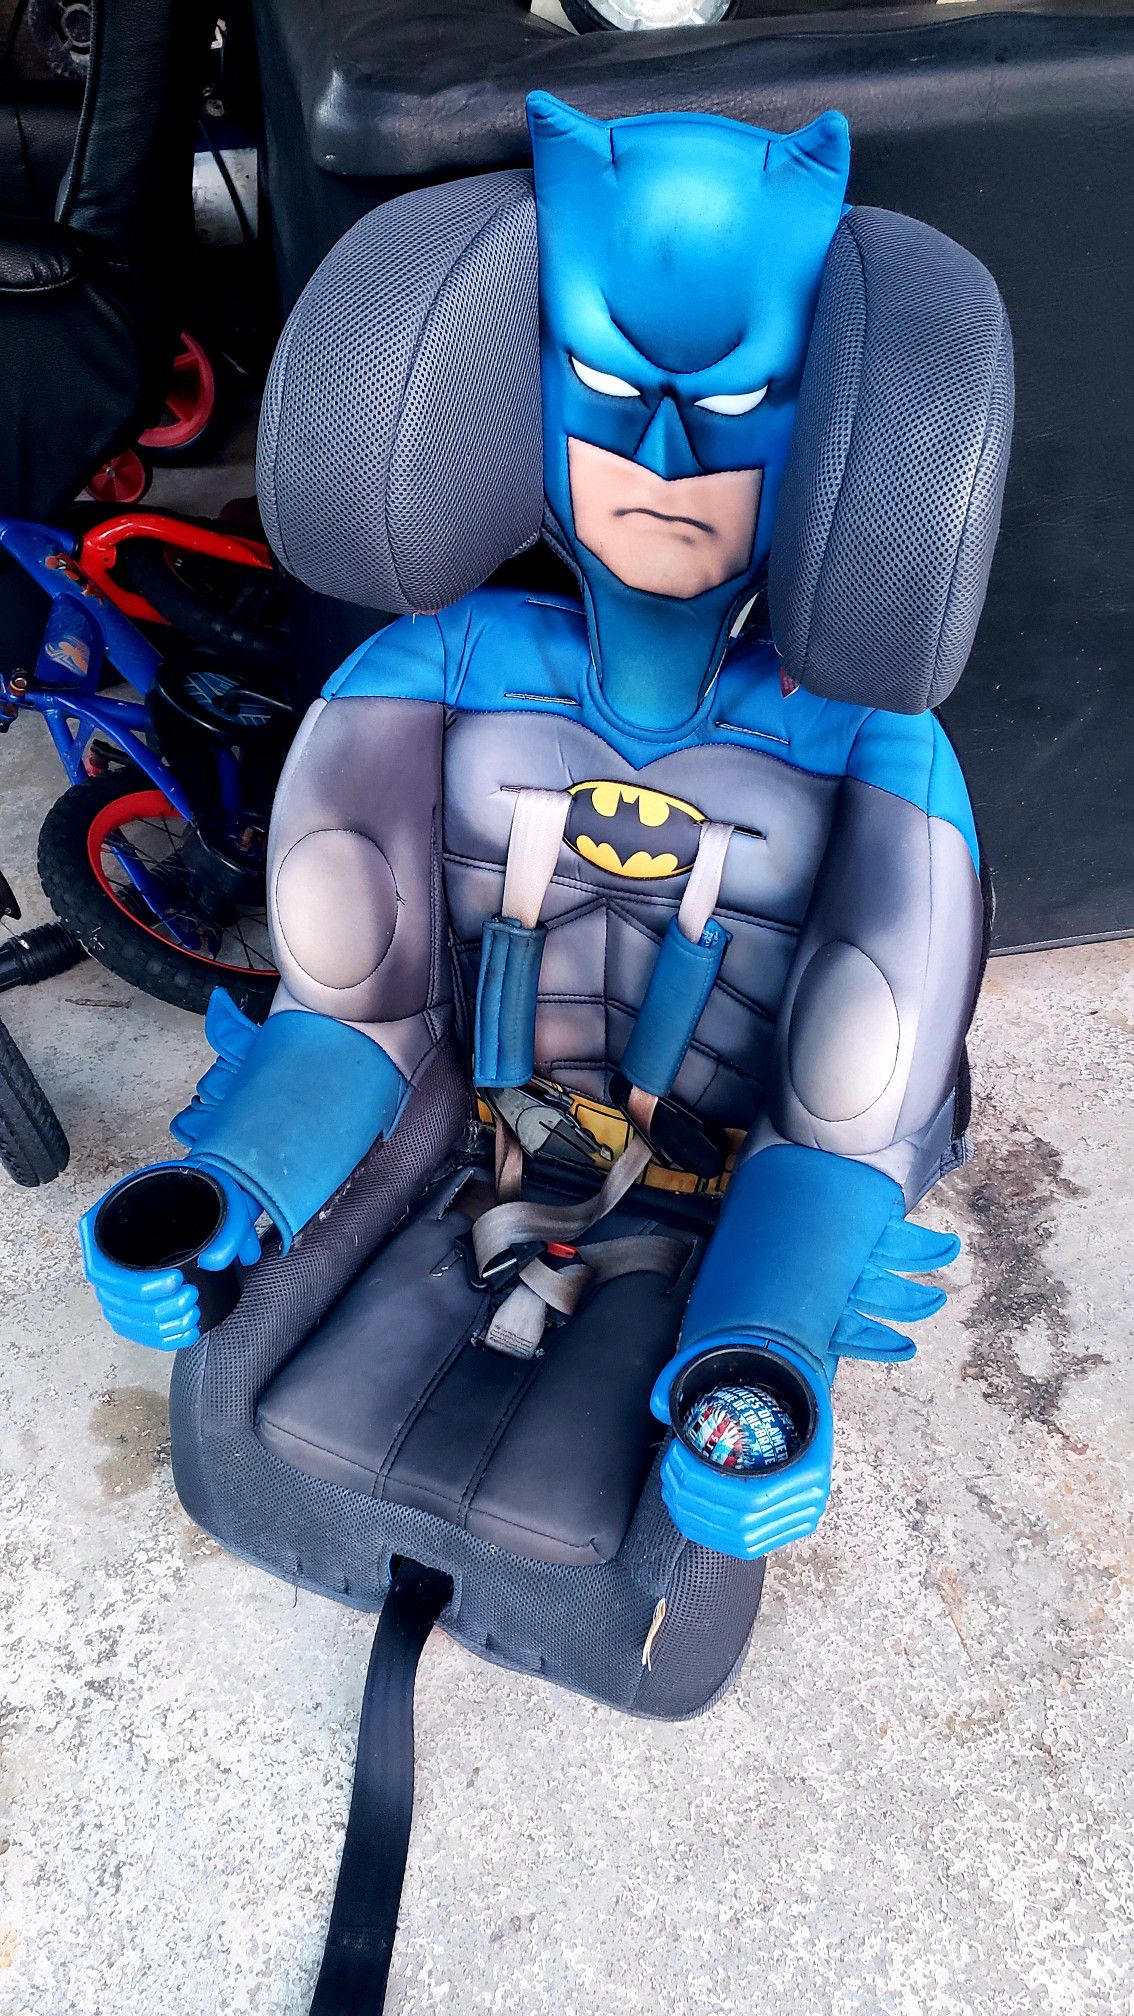 Batman car seat. Very original!